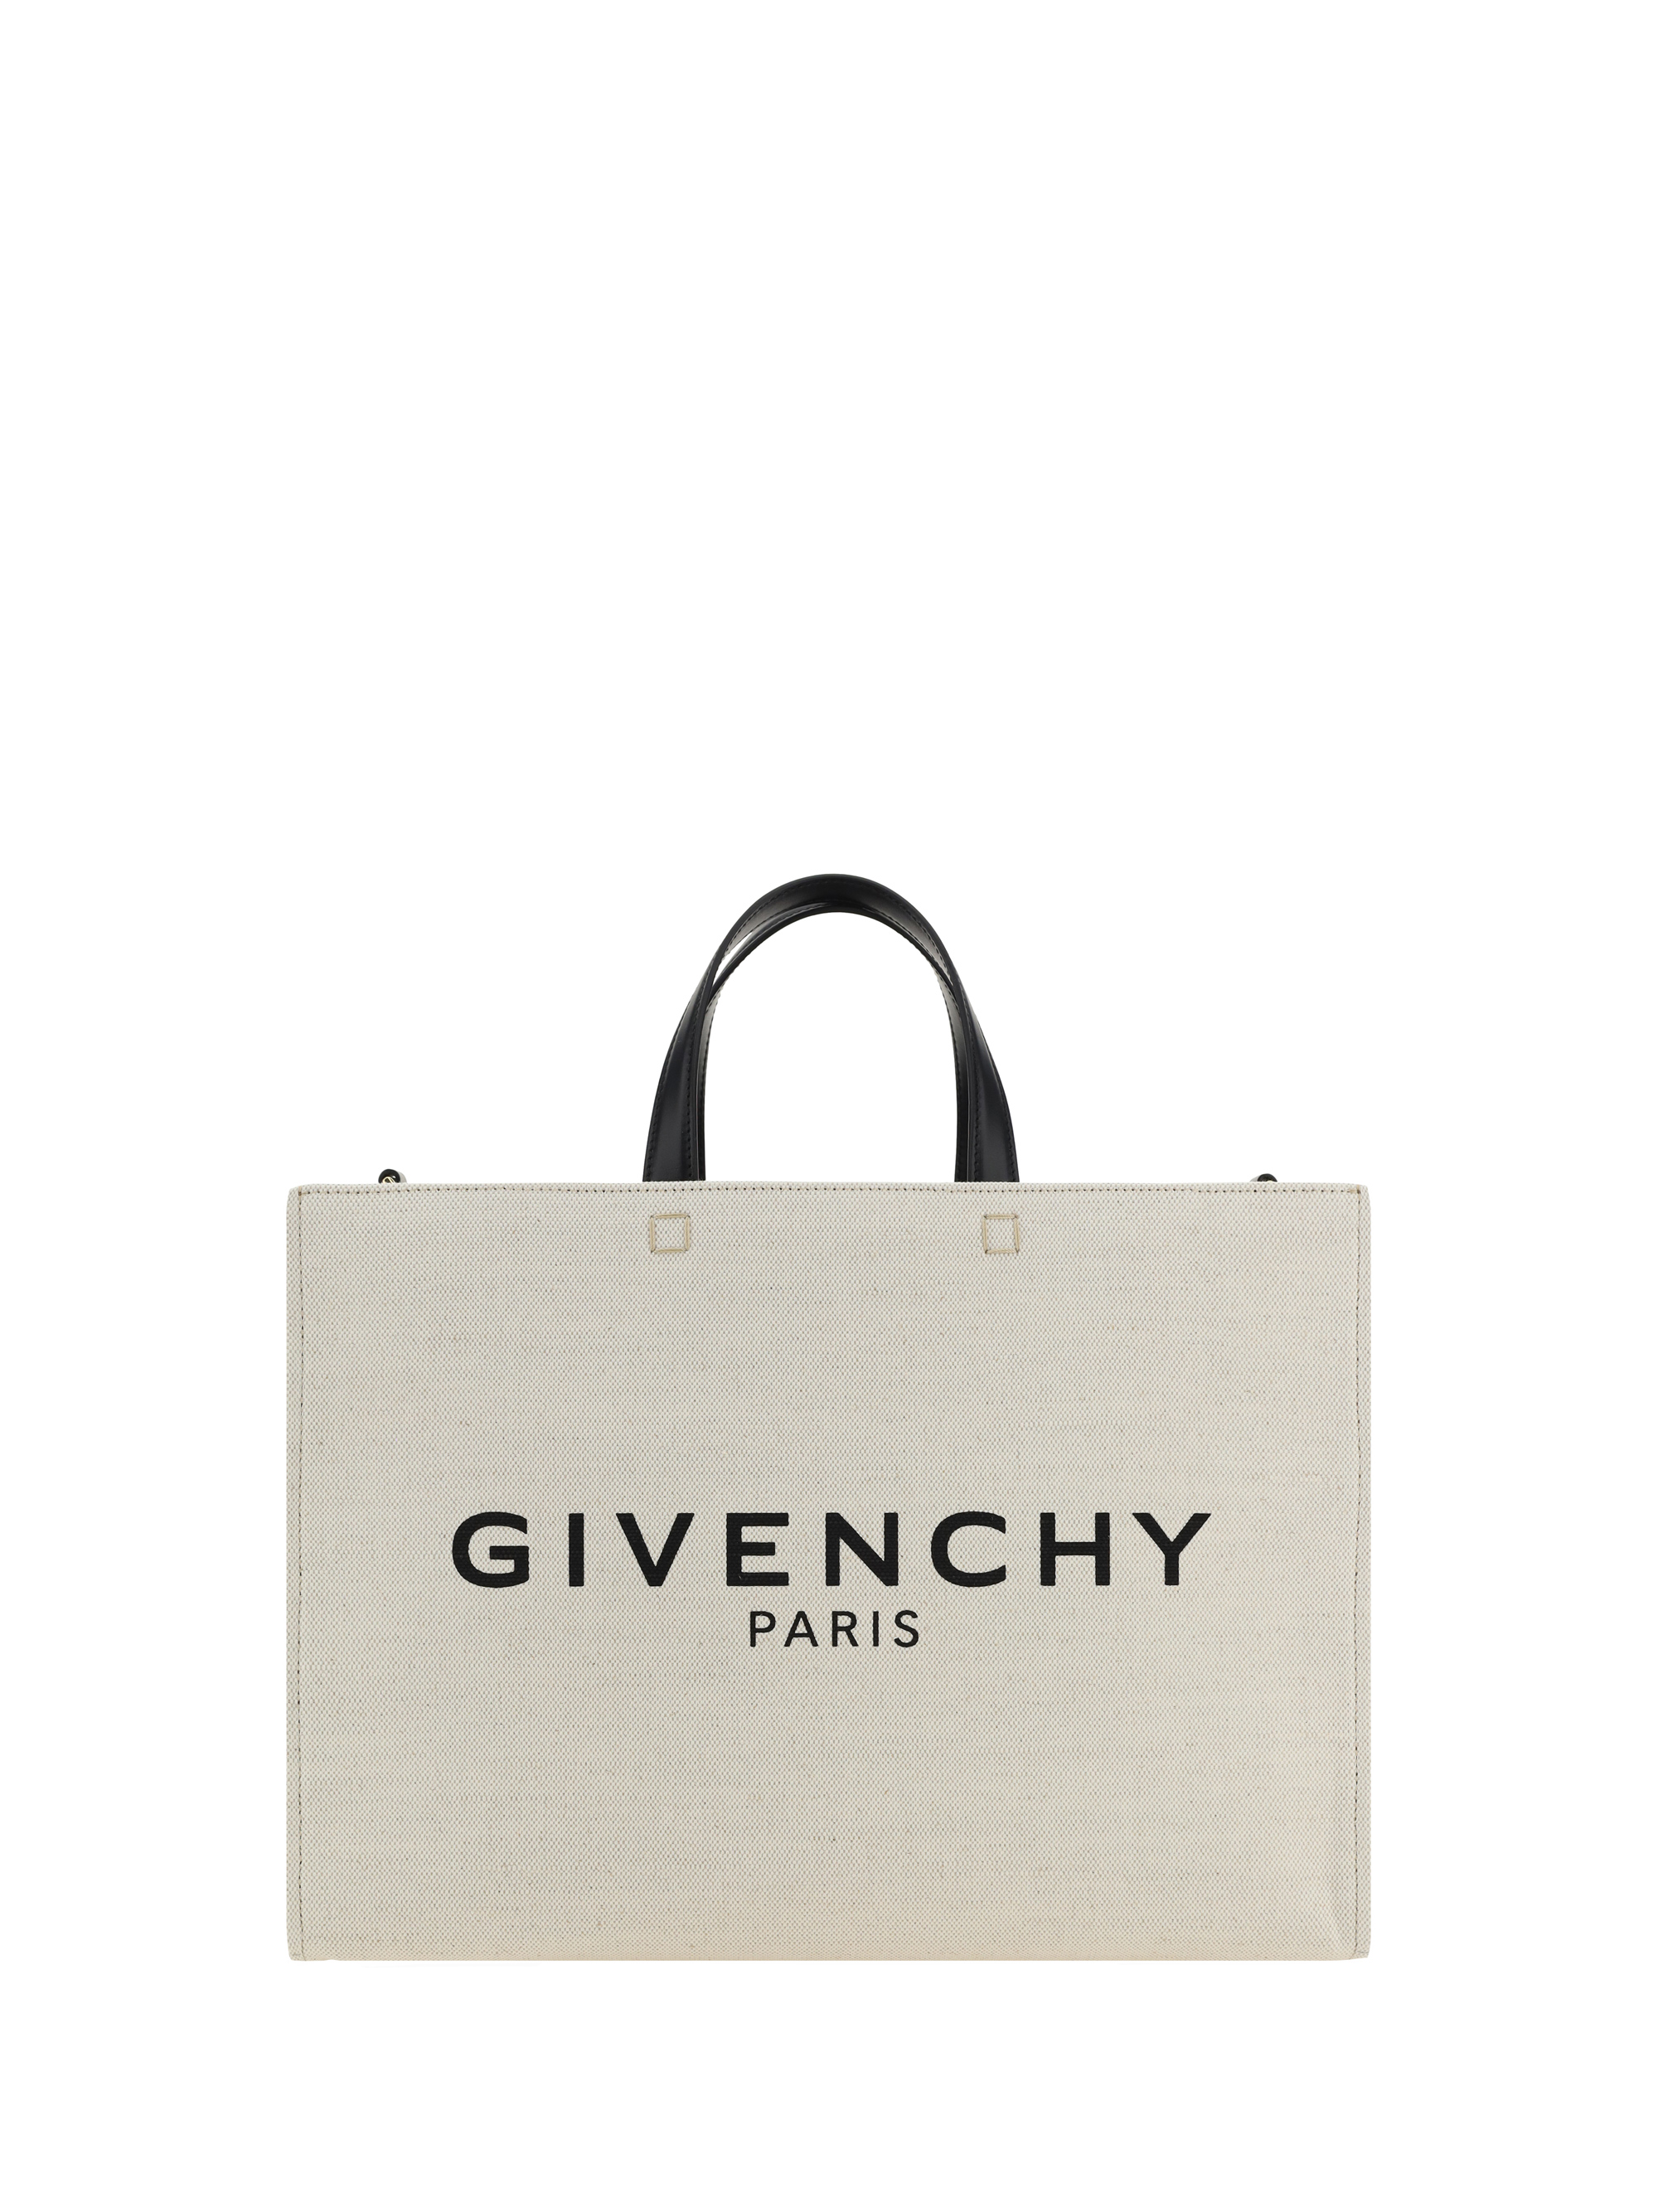 Givenchy G-tote Handbag In Beige/black